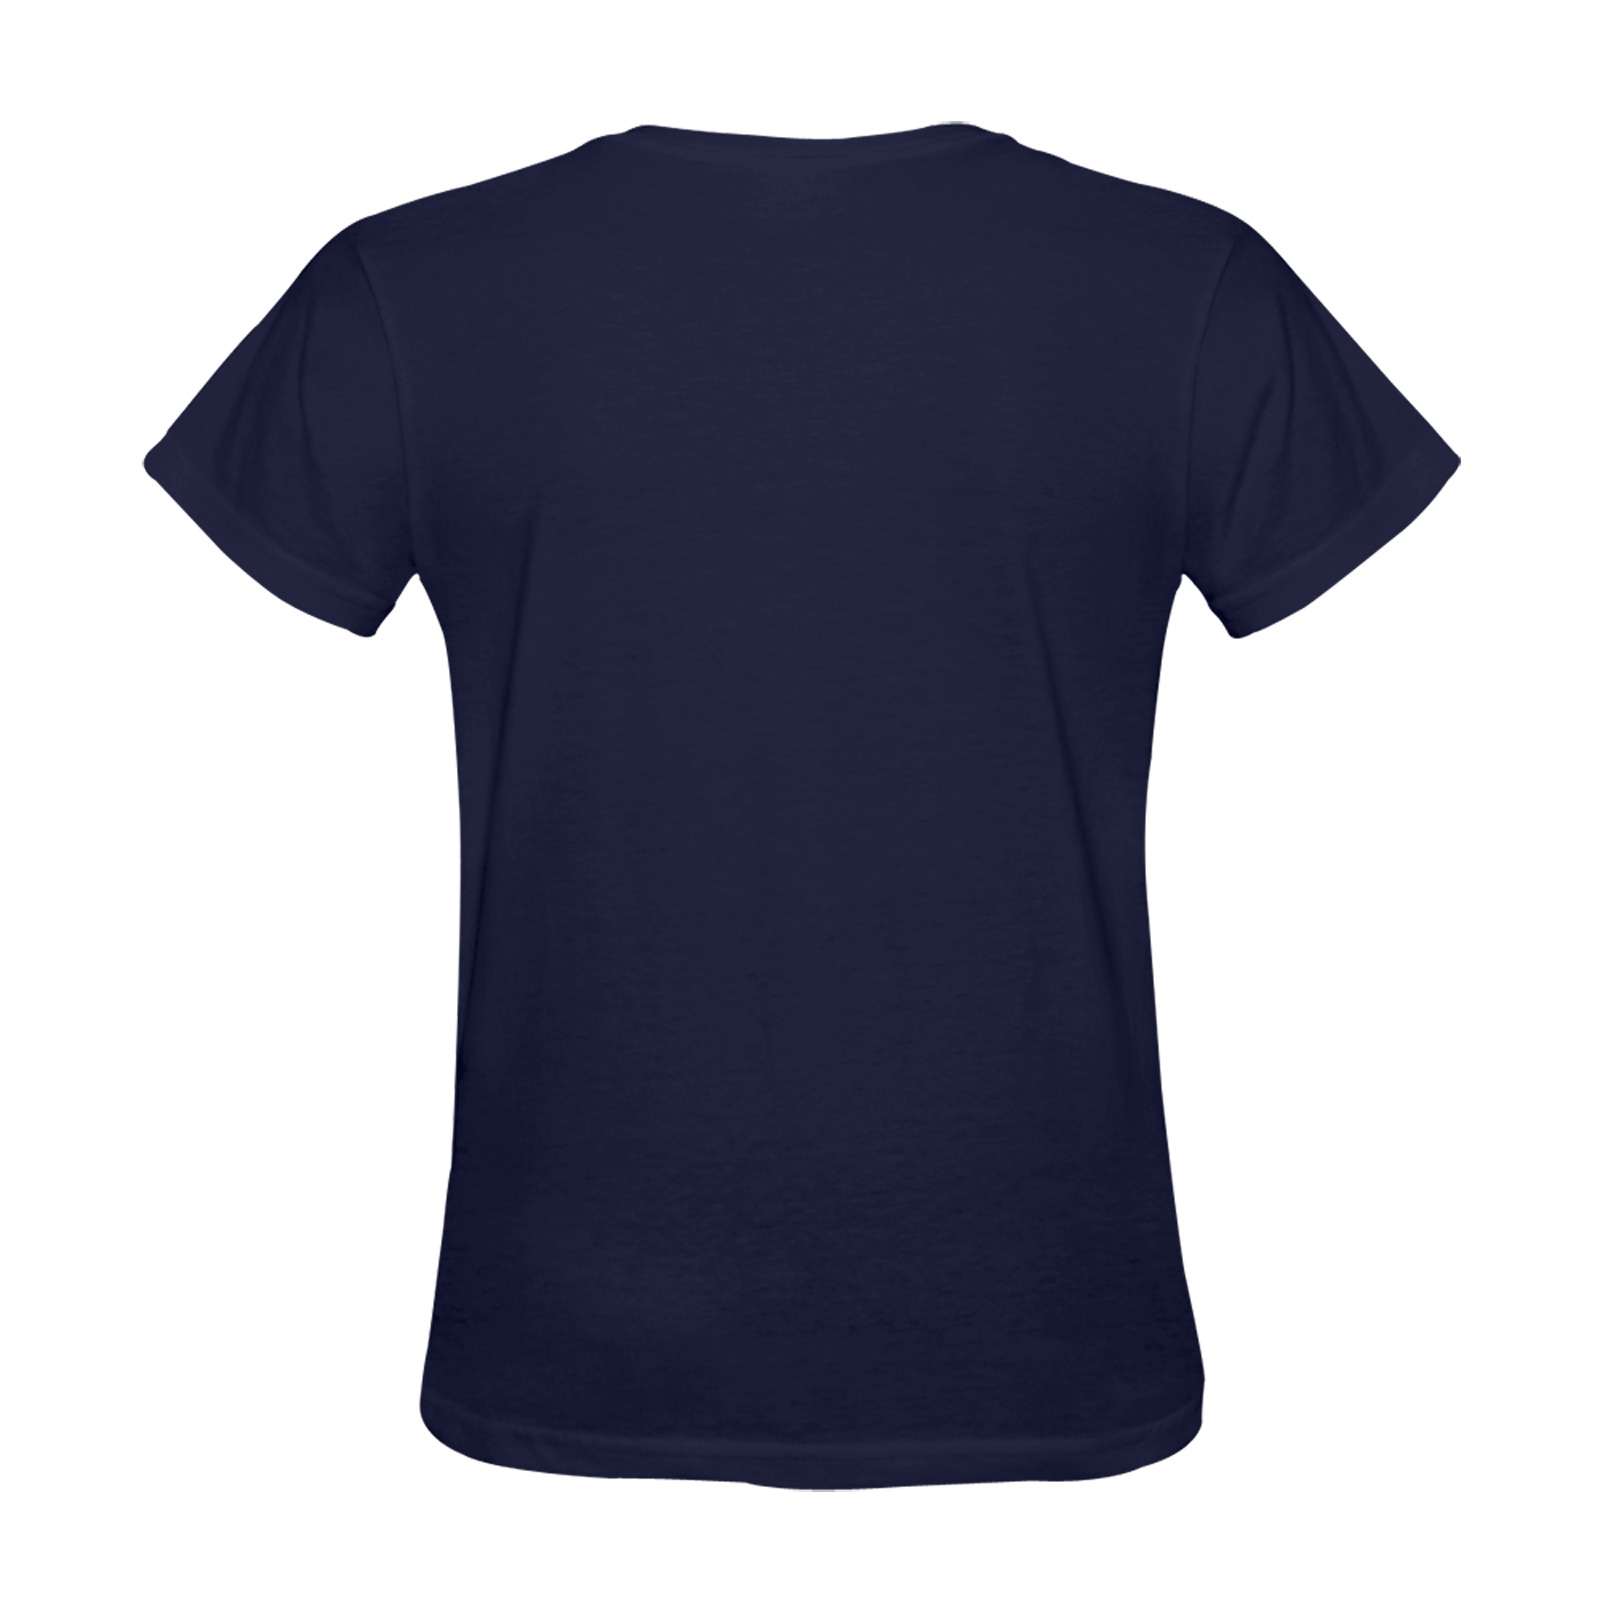 Blue Dolphin Sealife Cartoon Sunny Women's T-shirt (Model T05)